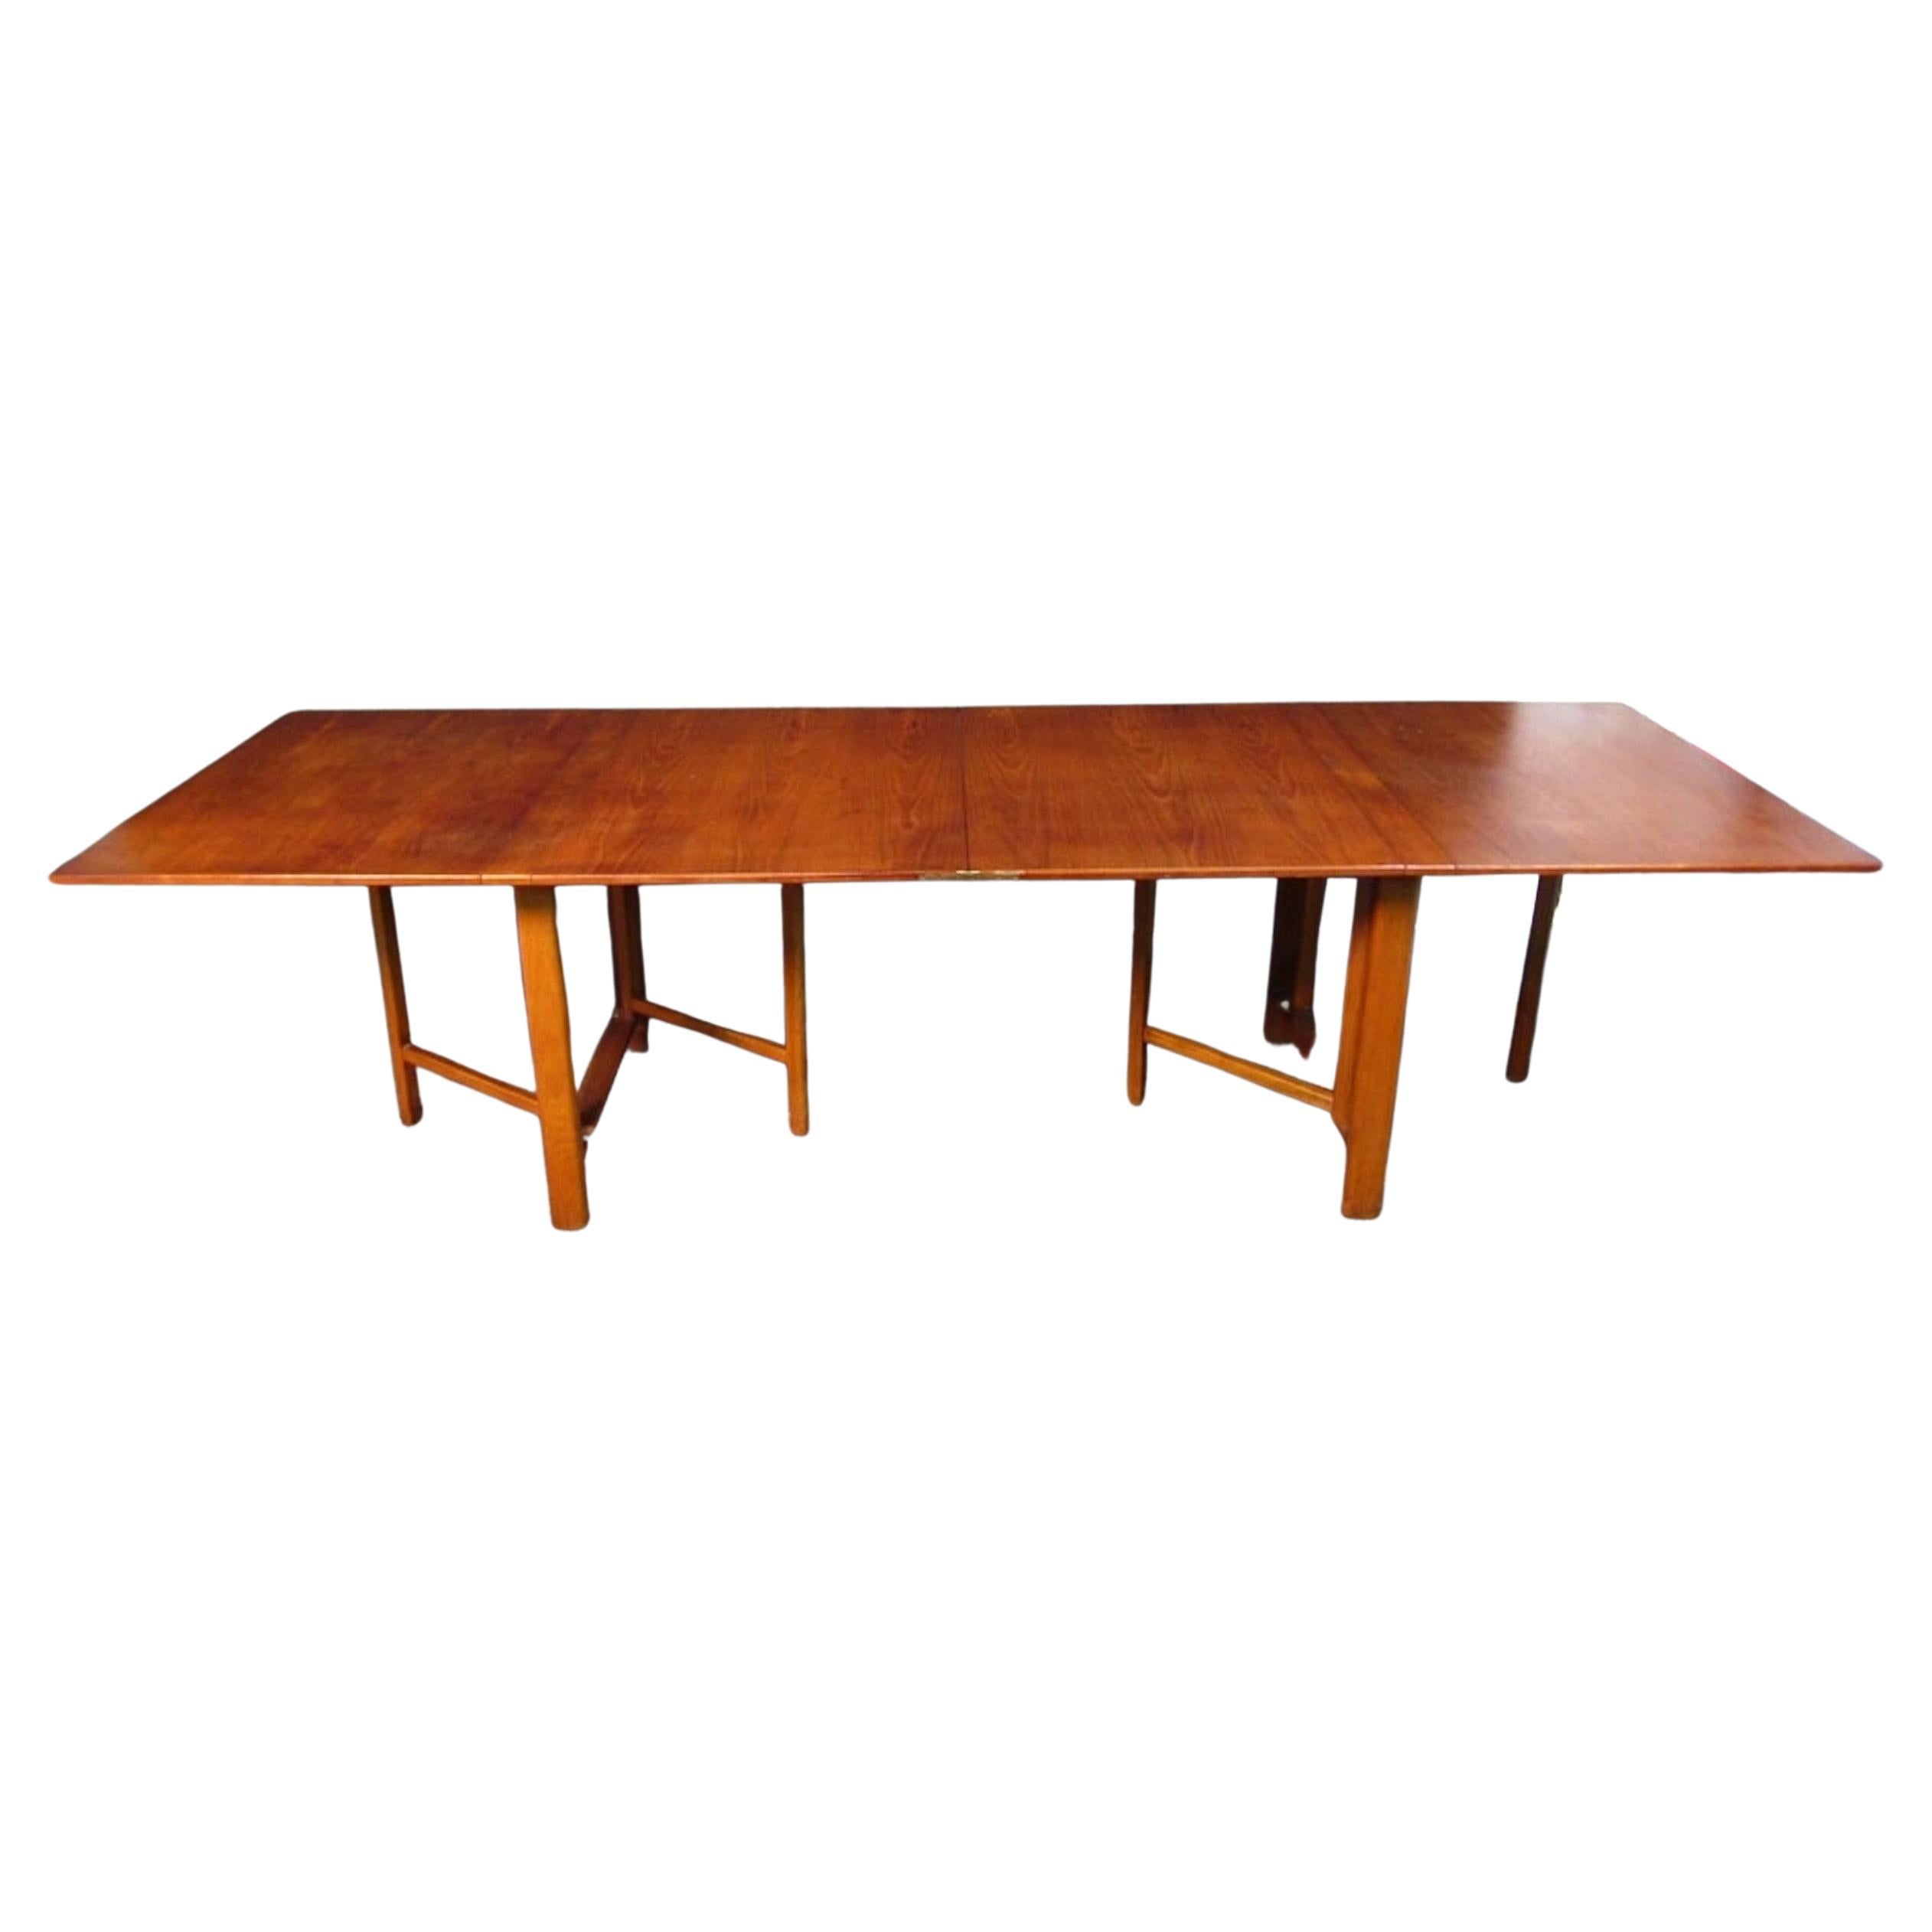 'Maria' Table by Bruno Mathsson